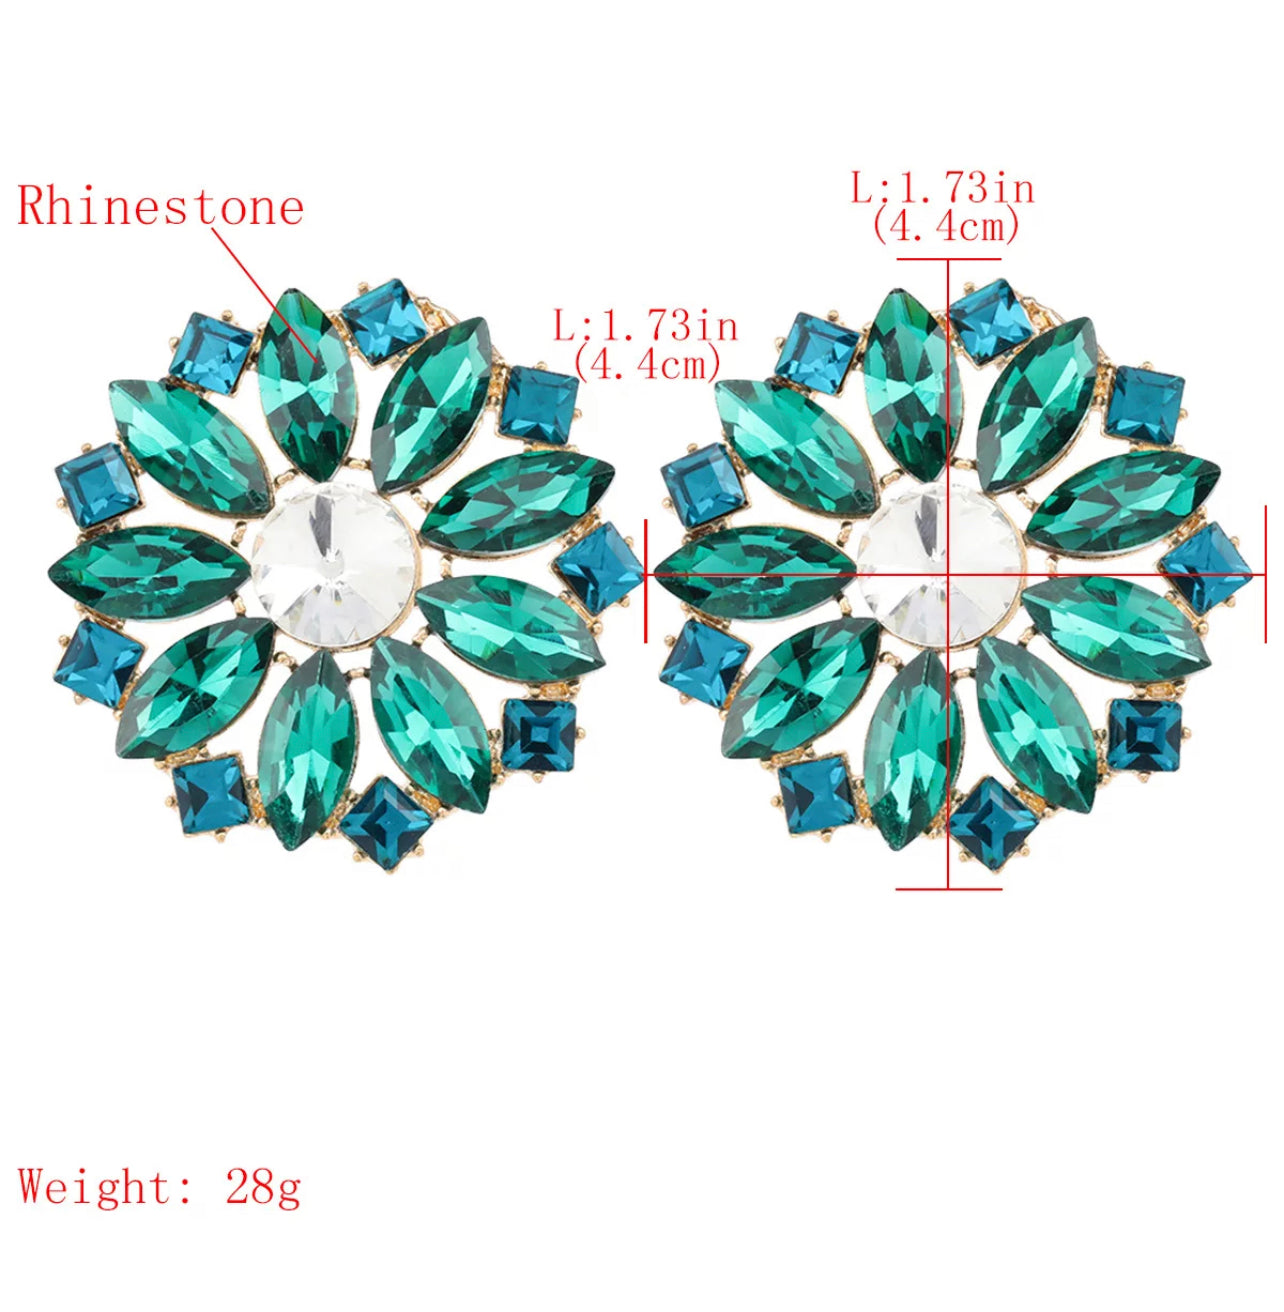 Luxury Crystal Rhinestones Flower Designed Statement Stud Earrings